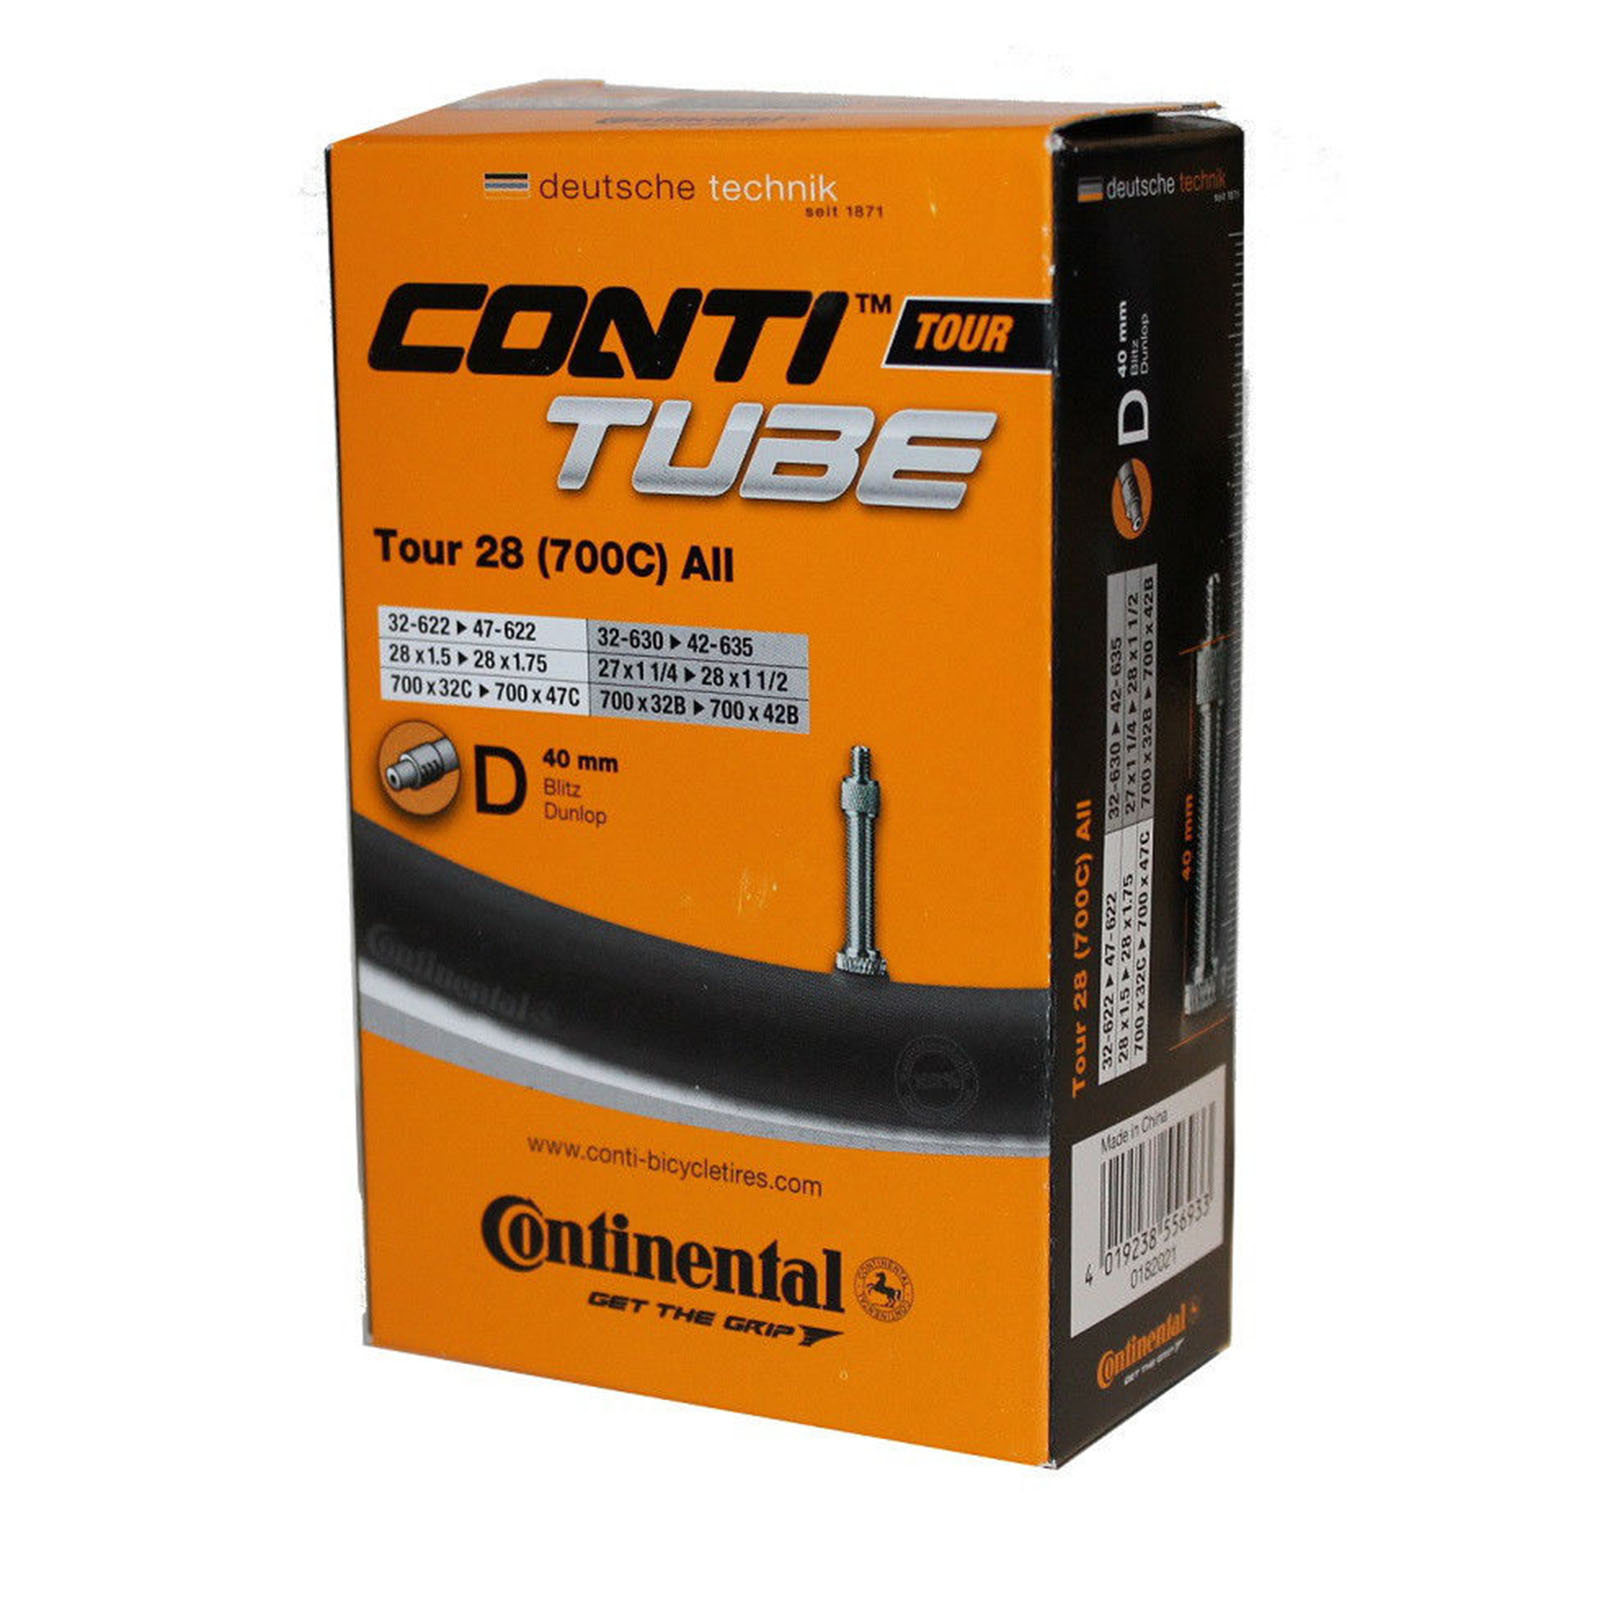 Continental Schlauch 28" Tour28all DV 40mm